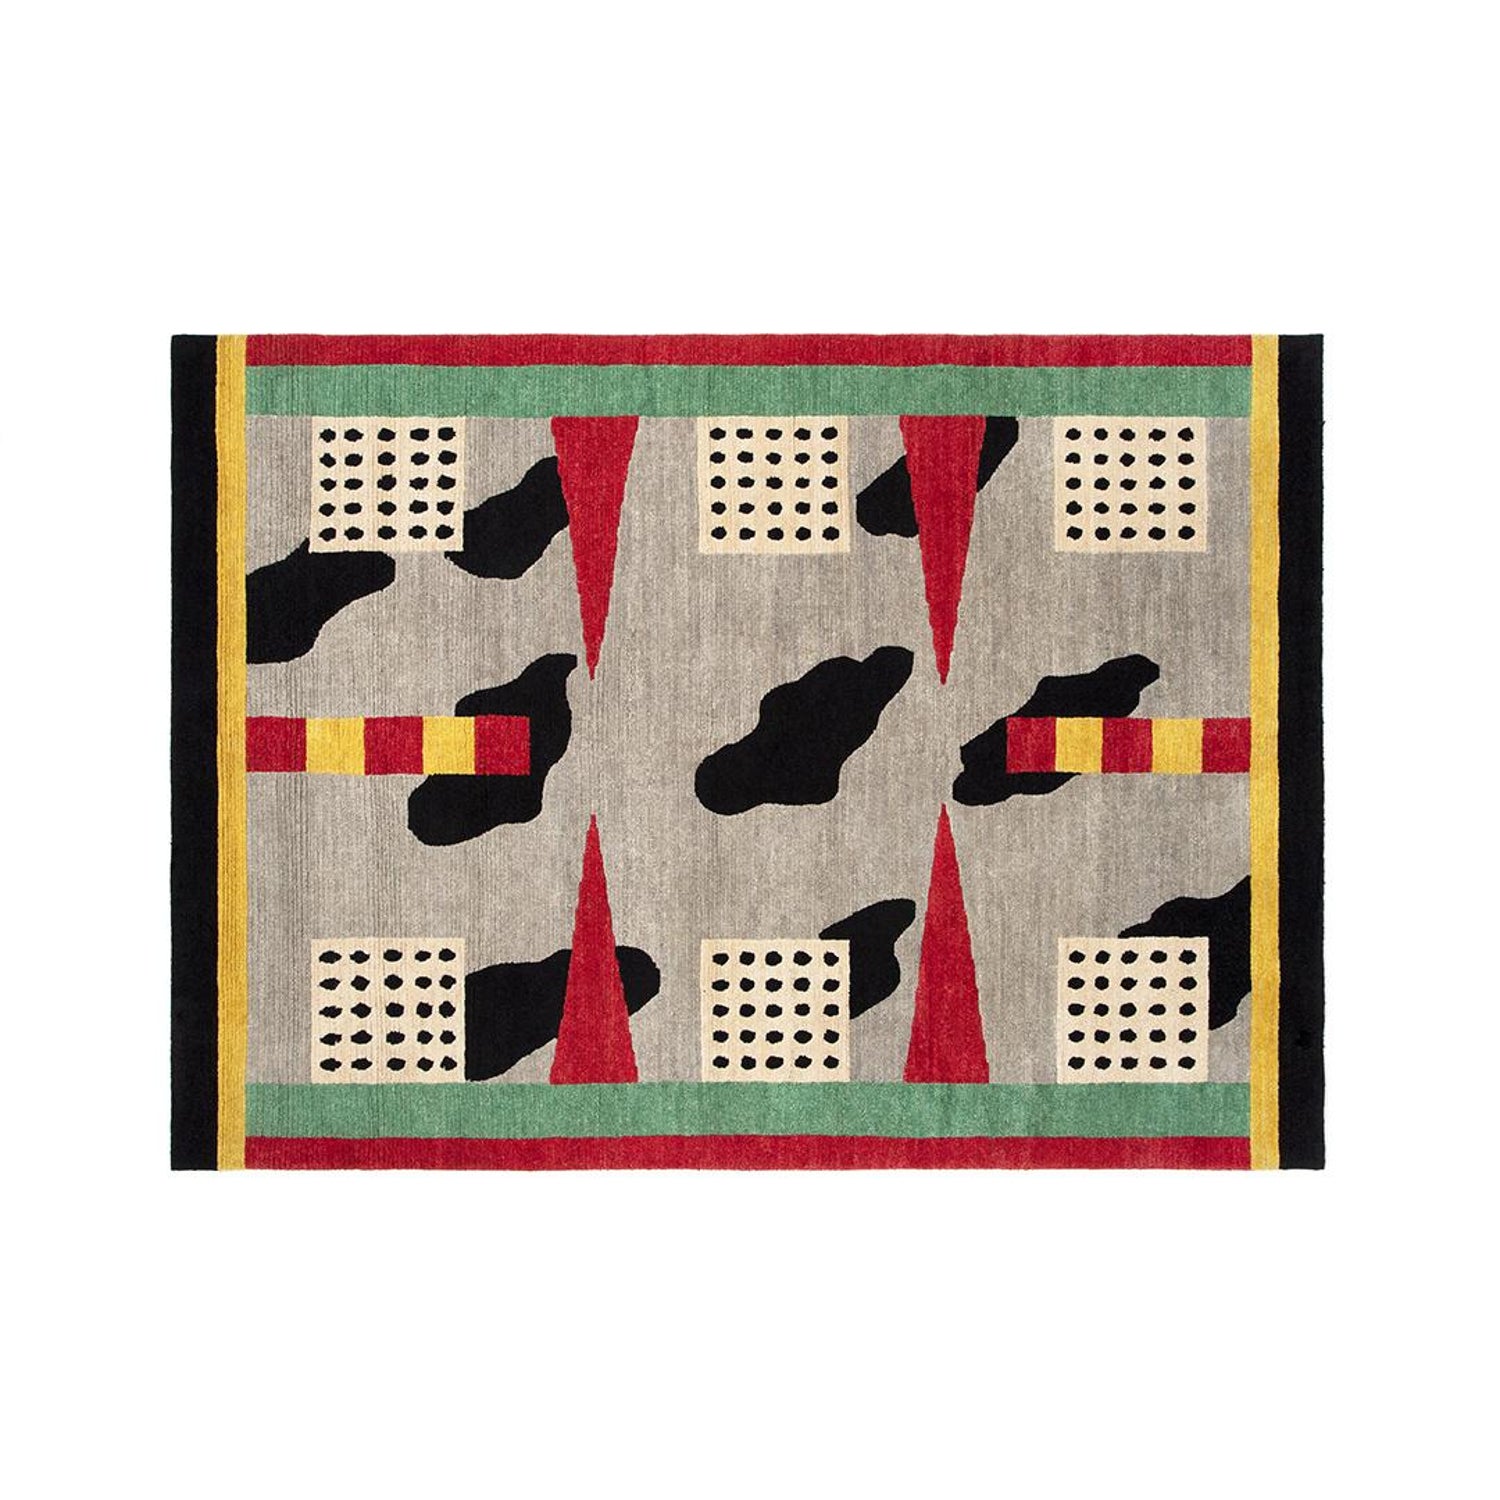 Woolen du carpet nathalie pasquier at by memphis du For nathalie rug, | Du from milano pasquier Sale Carpet, Milano rug, Arizona Memphis 1stDibs Nathalie Pasquier